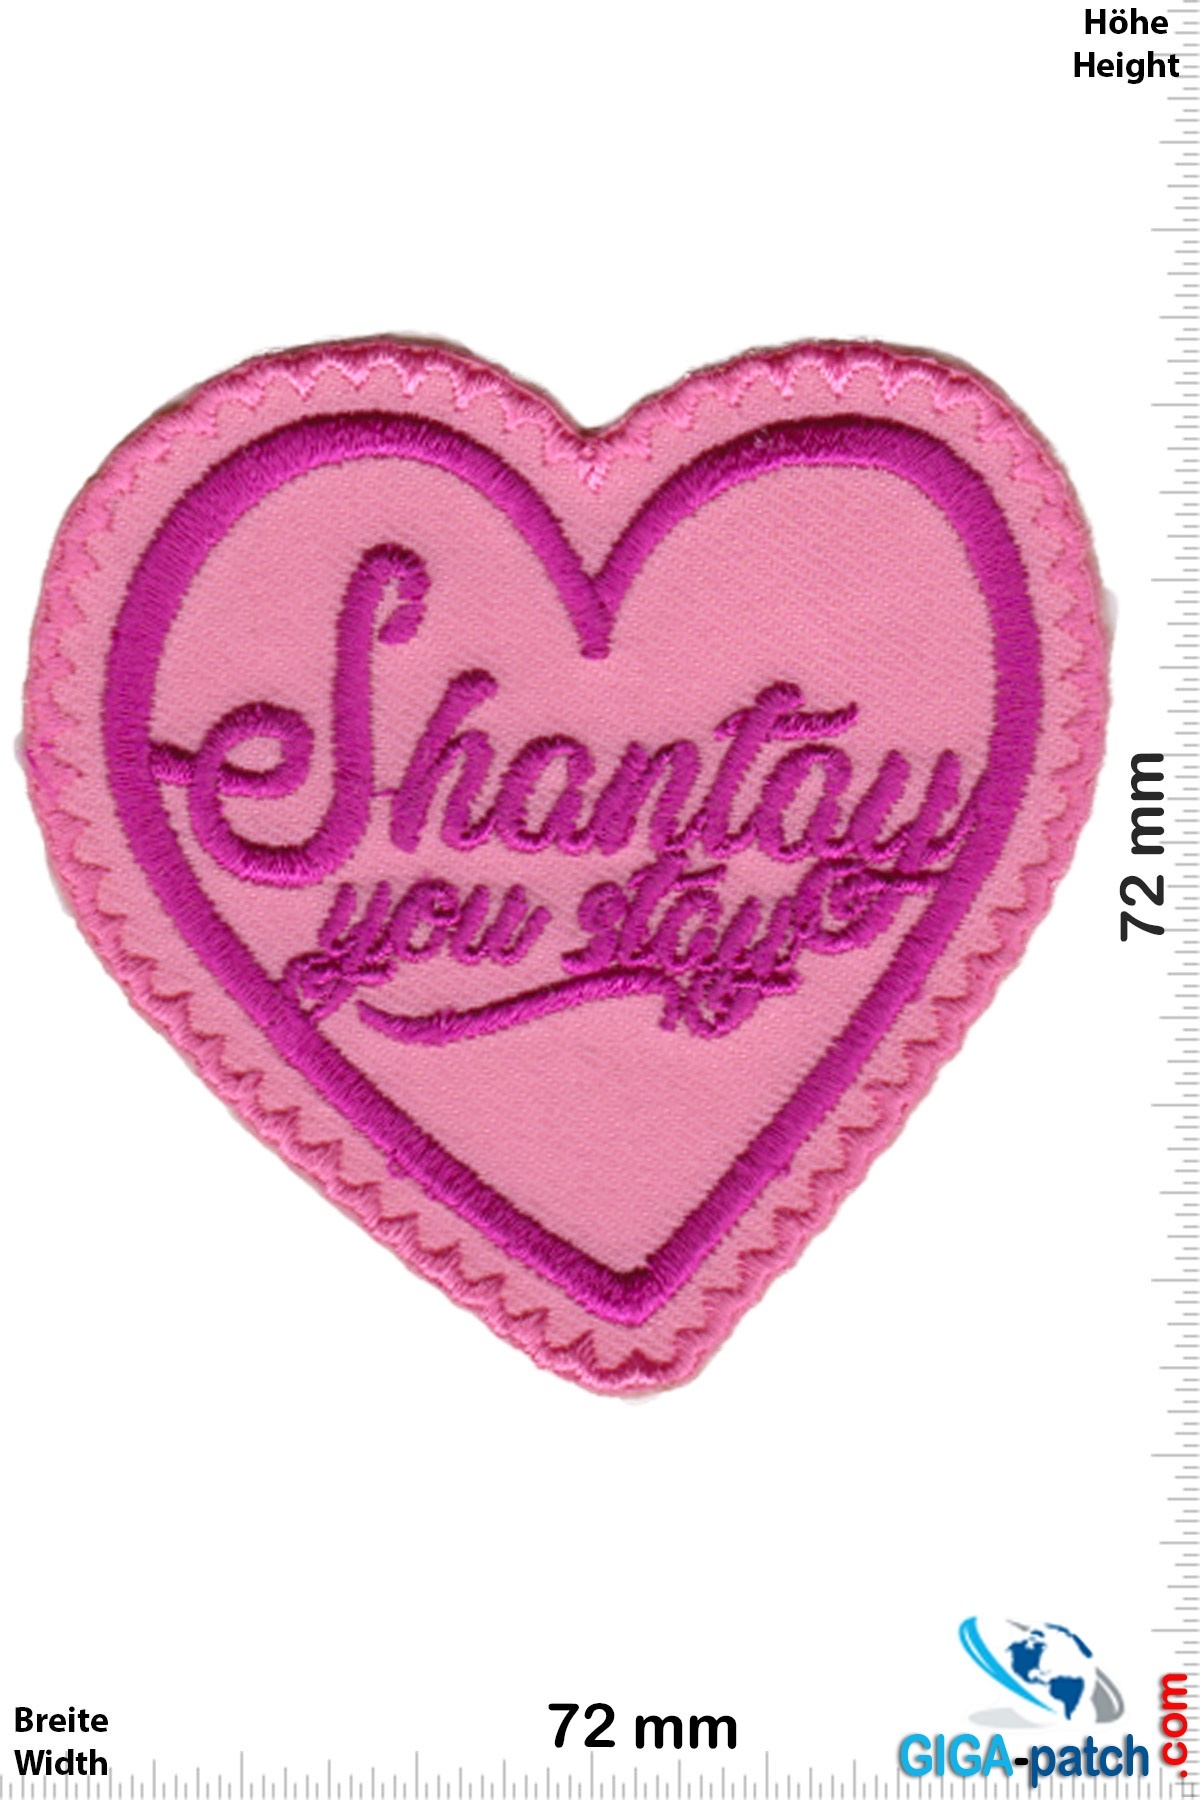 RuPaul - Drag Queen - Shantay you stay - Herz